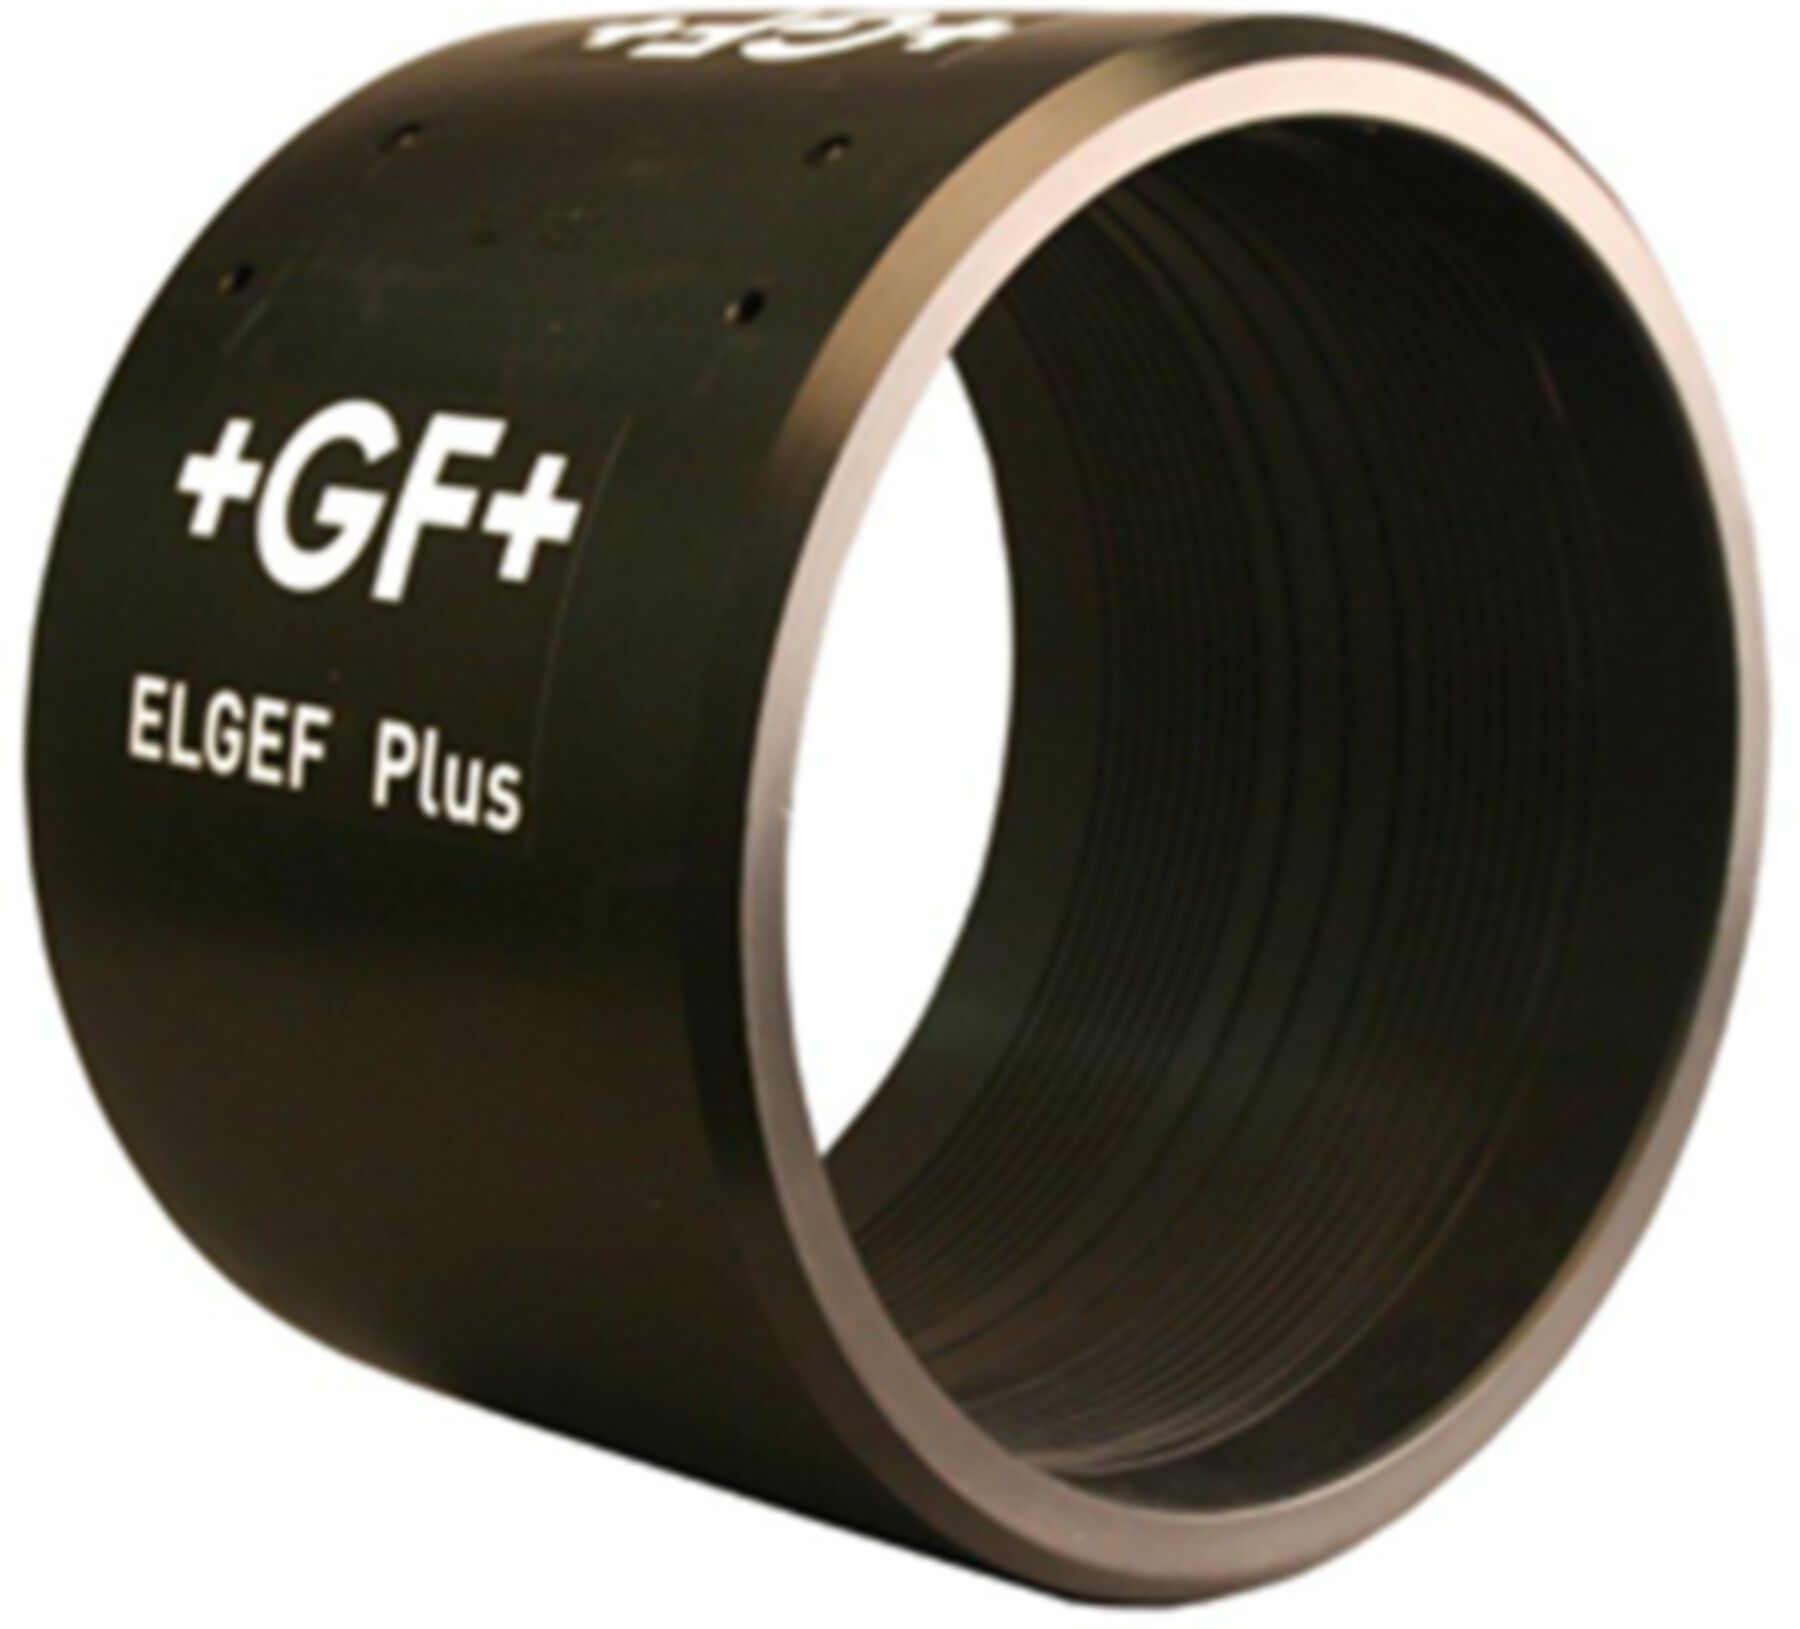 ELGEF Muffe PN 16 d 315mm 753 911 623 - ELGEF Plus Elektroschweissfittinge